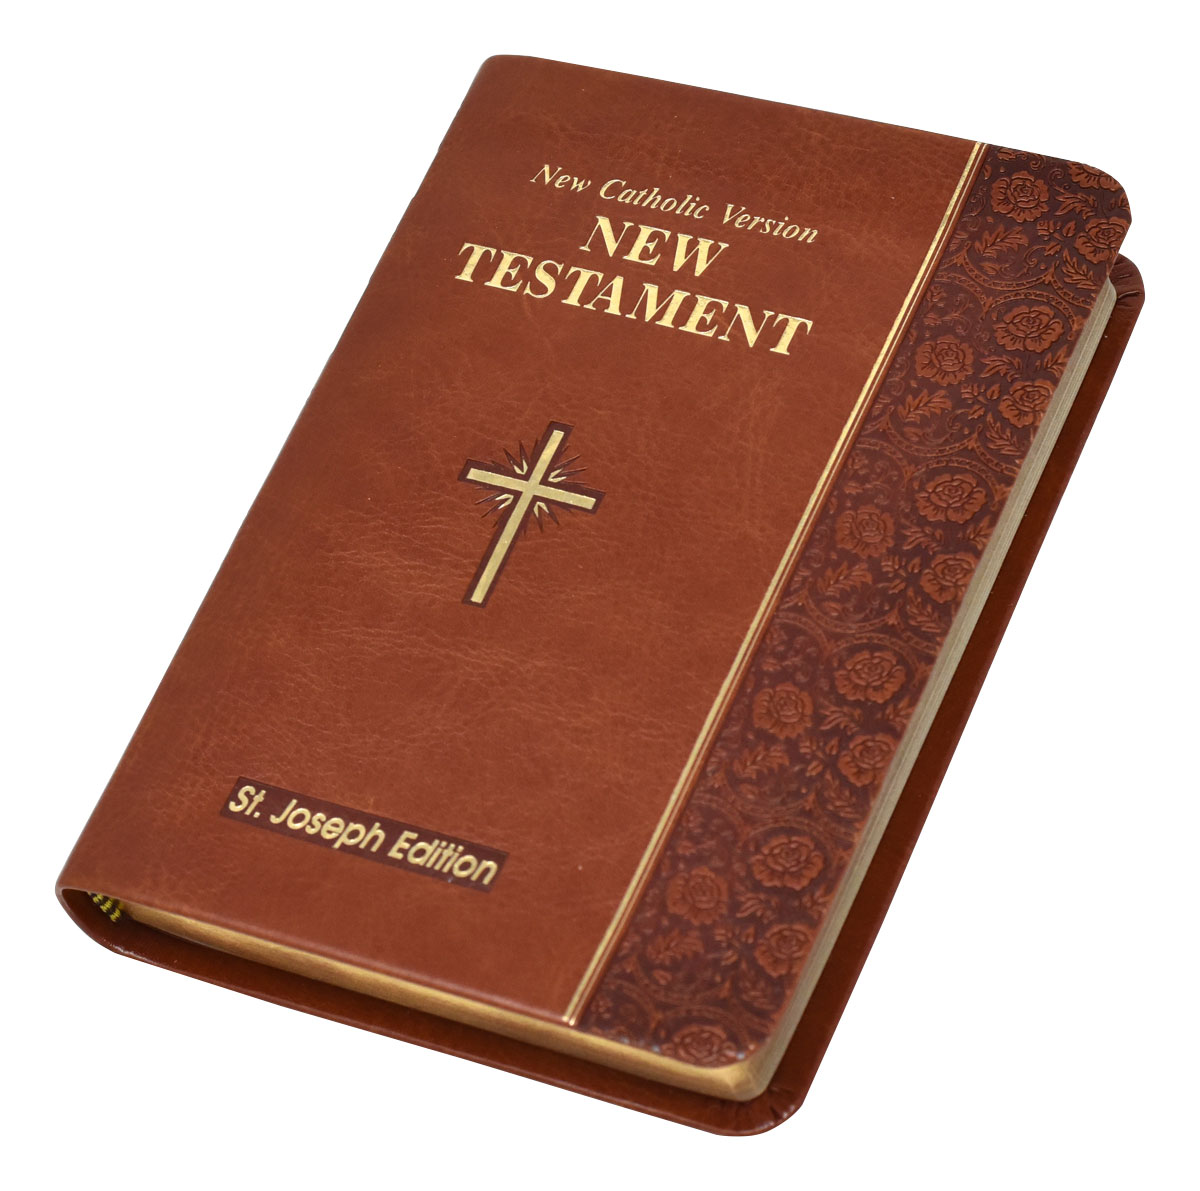 St. Joseph New Catholic Version New Testament Vest Pocket Edition Brown Dura Lux 650/19BN